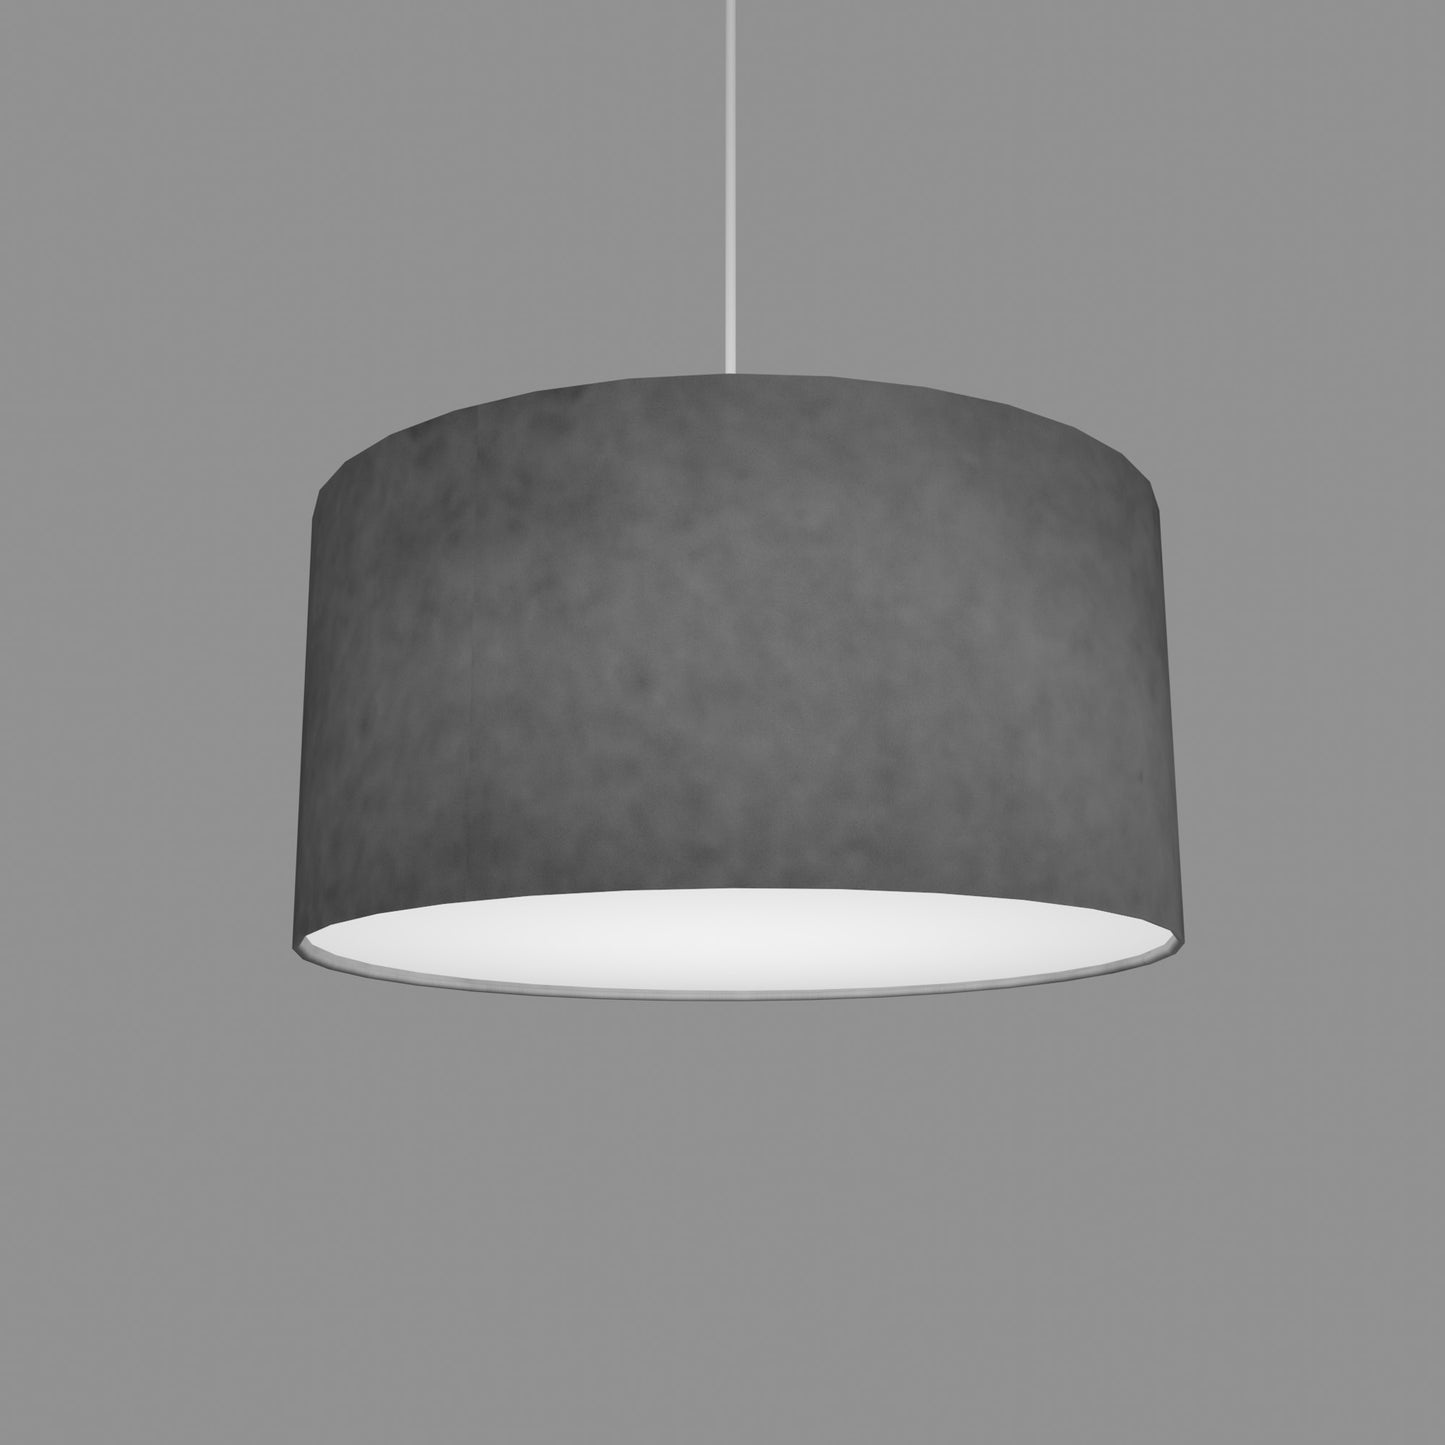 Drum Lamp Shade - P53 - Pewter Grey, 40cm(d) x 20cm(h)